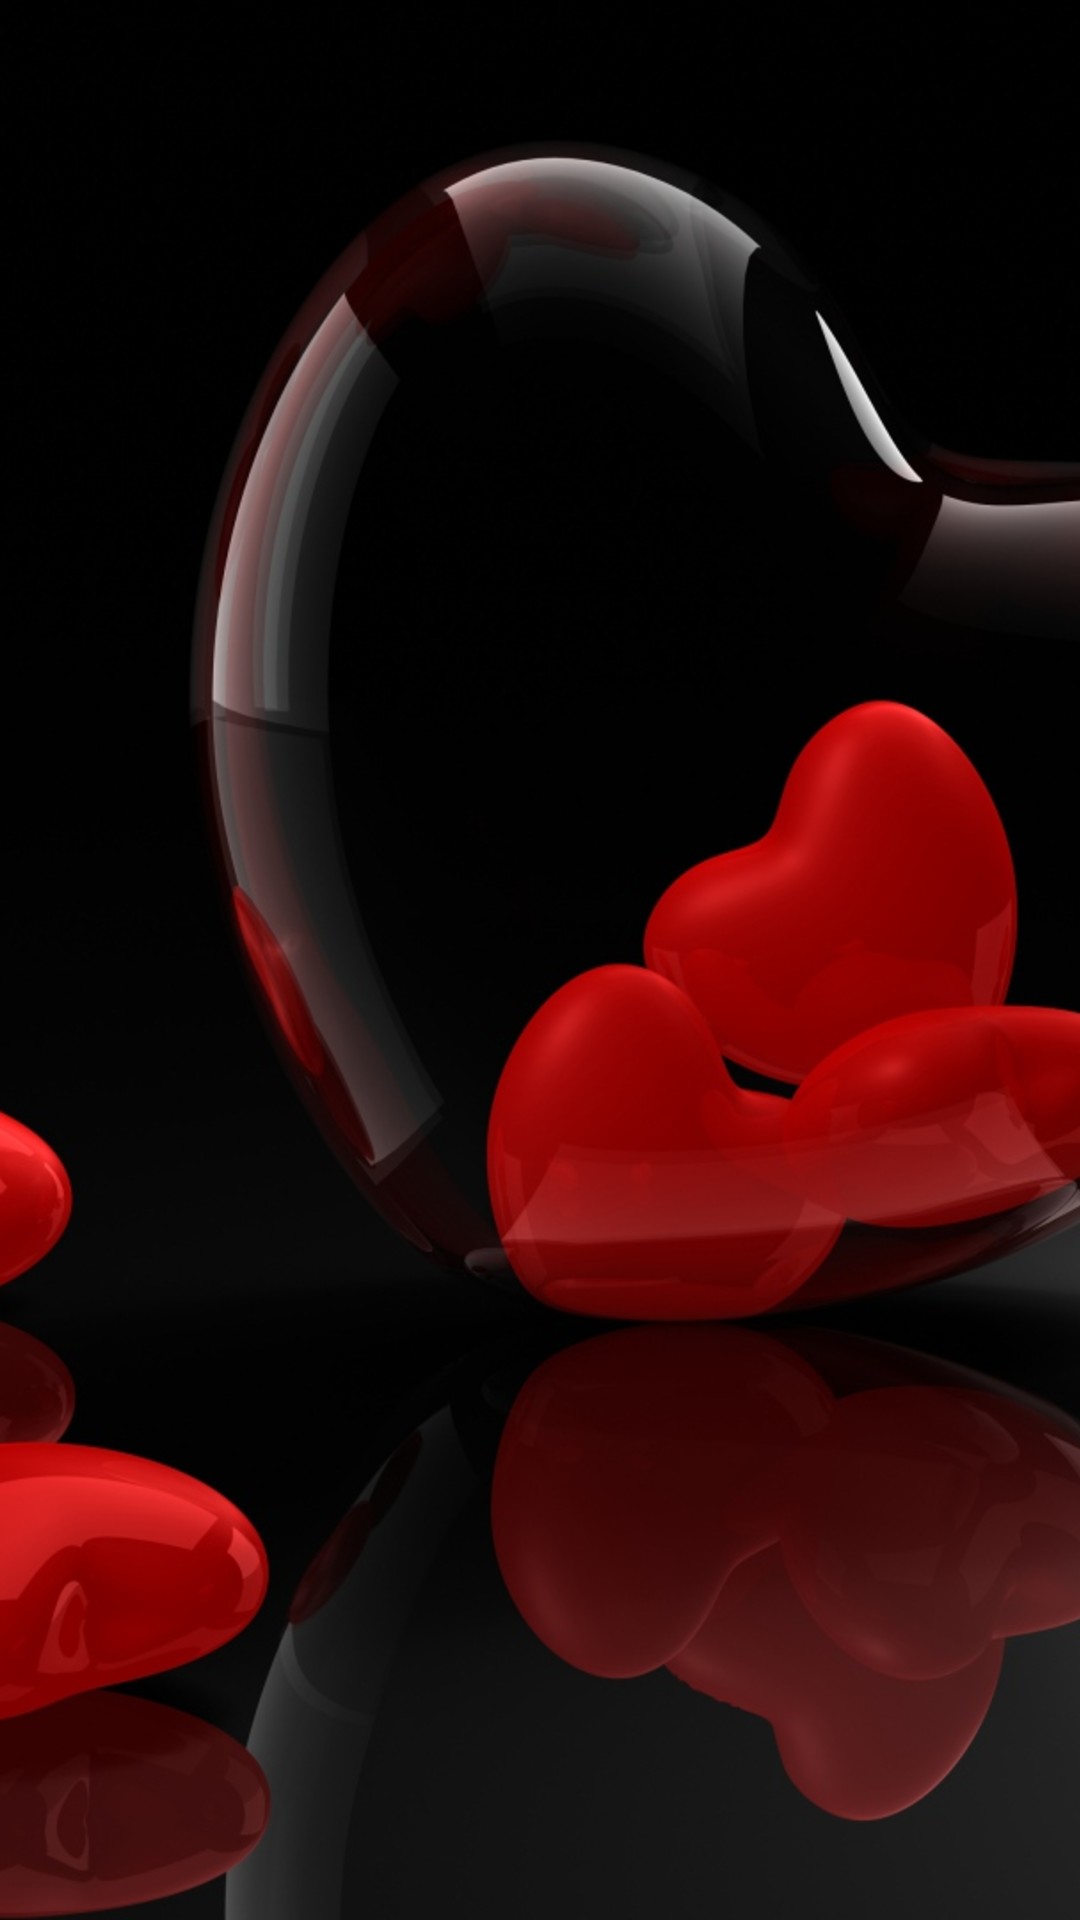 🔥 [50+] Red Hearts Black Background | Wallpapersafari